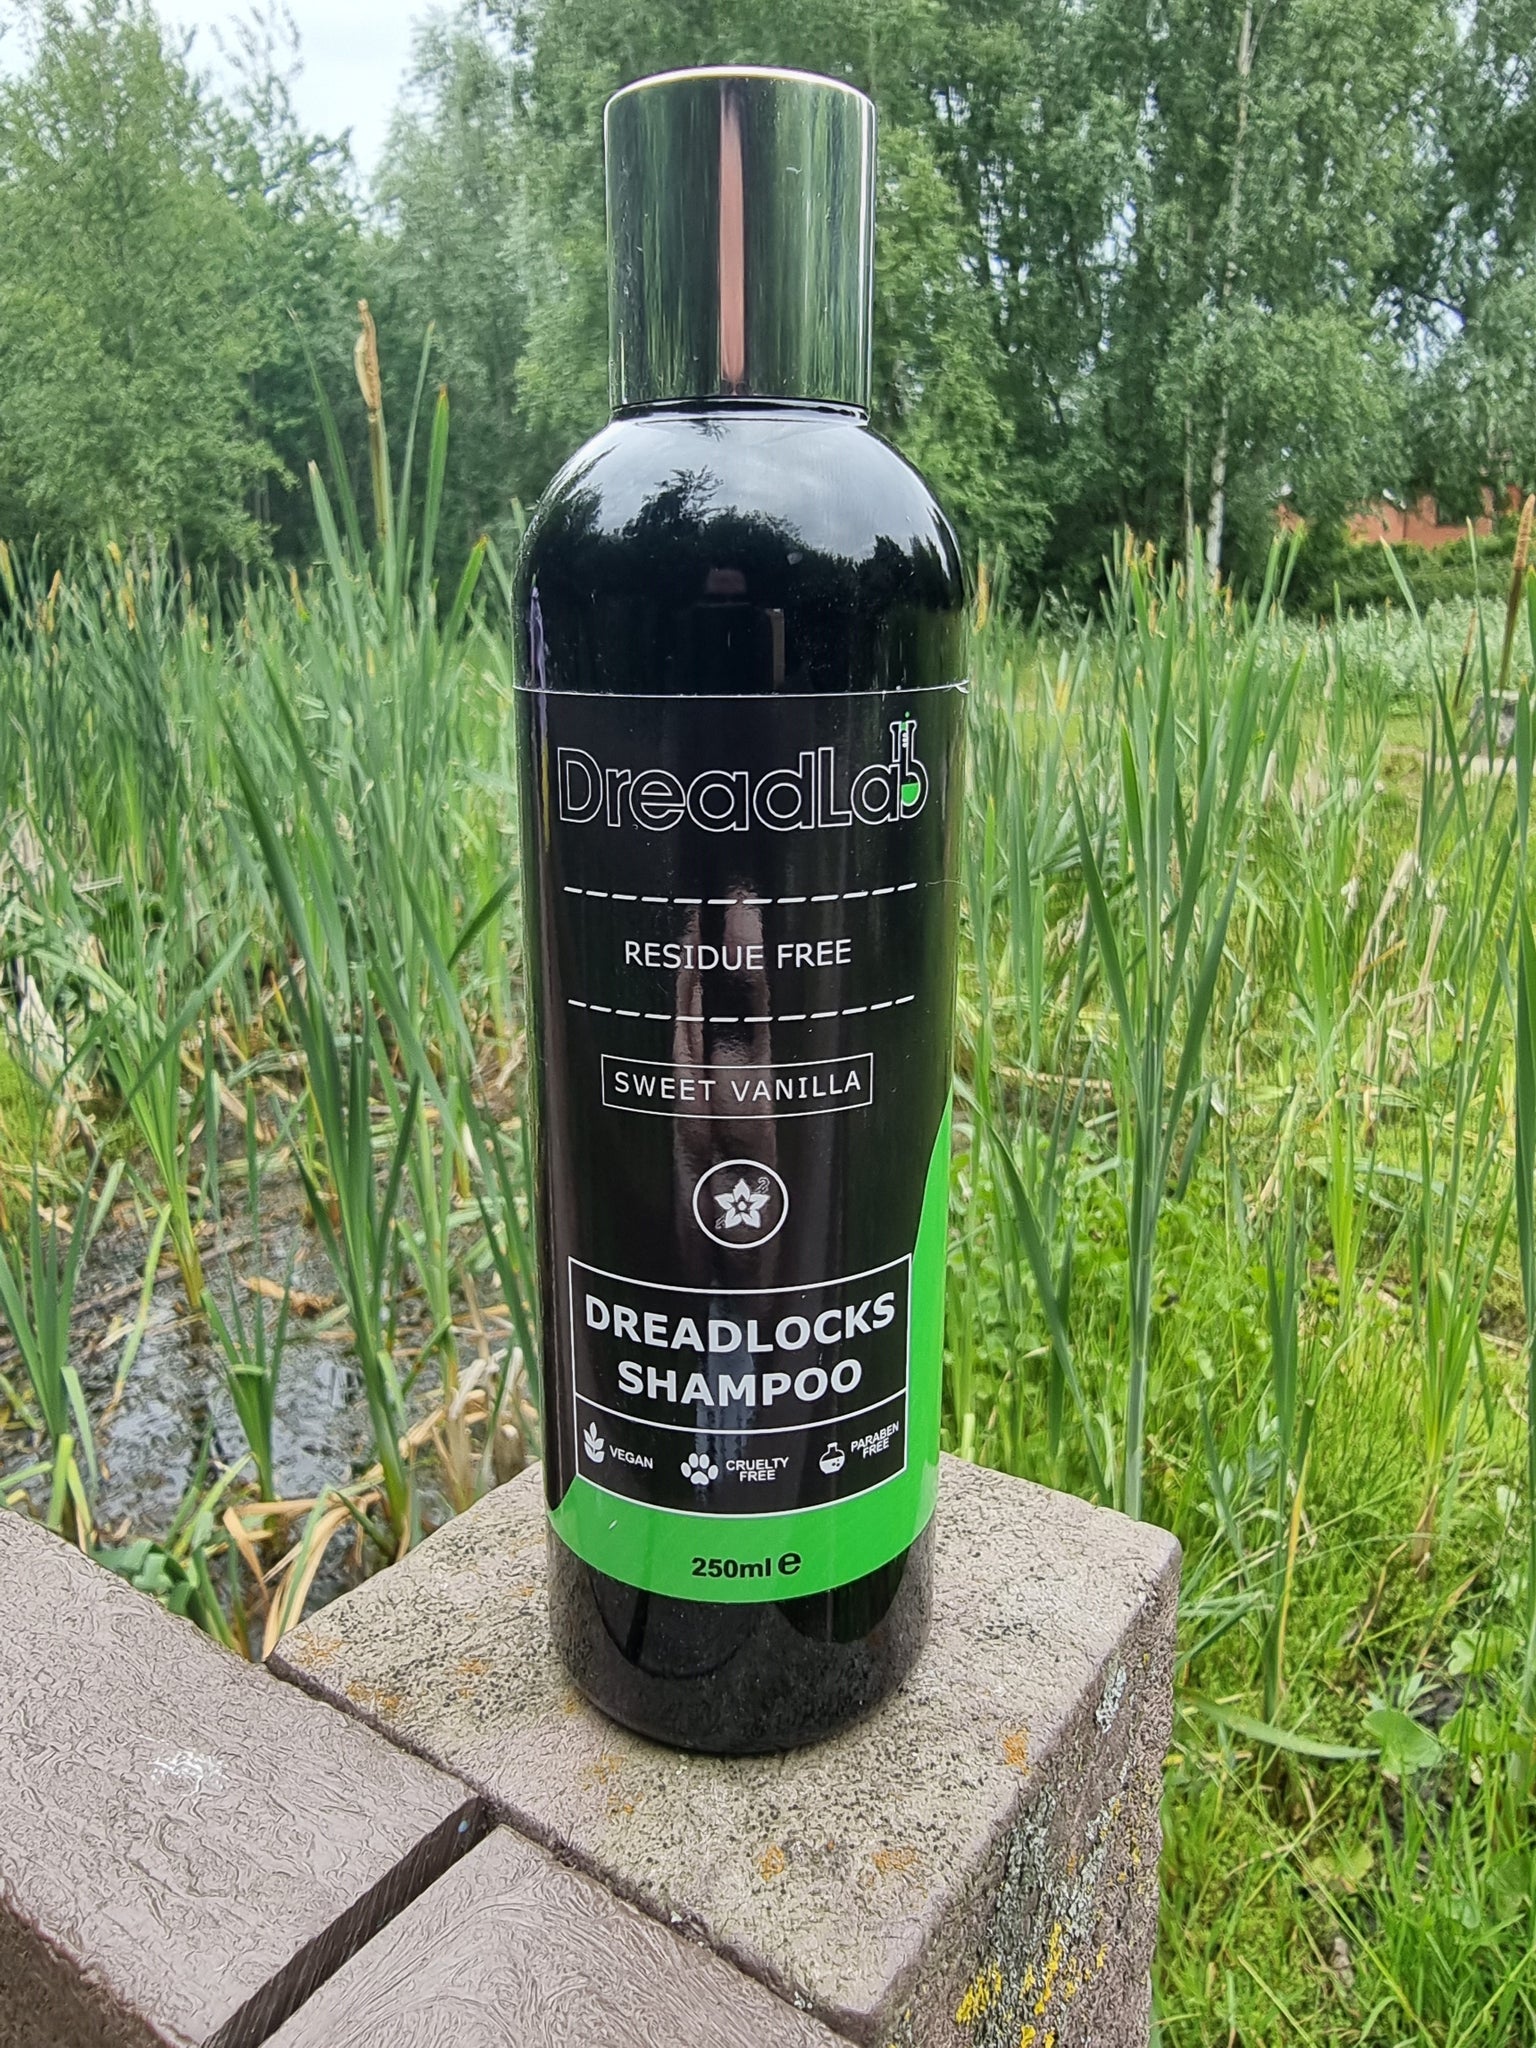 DreadLab - Liquid Dreadlocks Shampoo (250ml) Residue Free